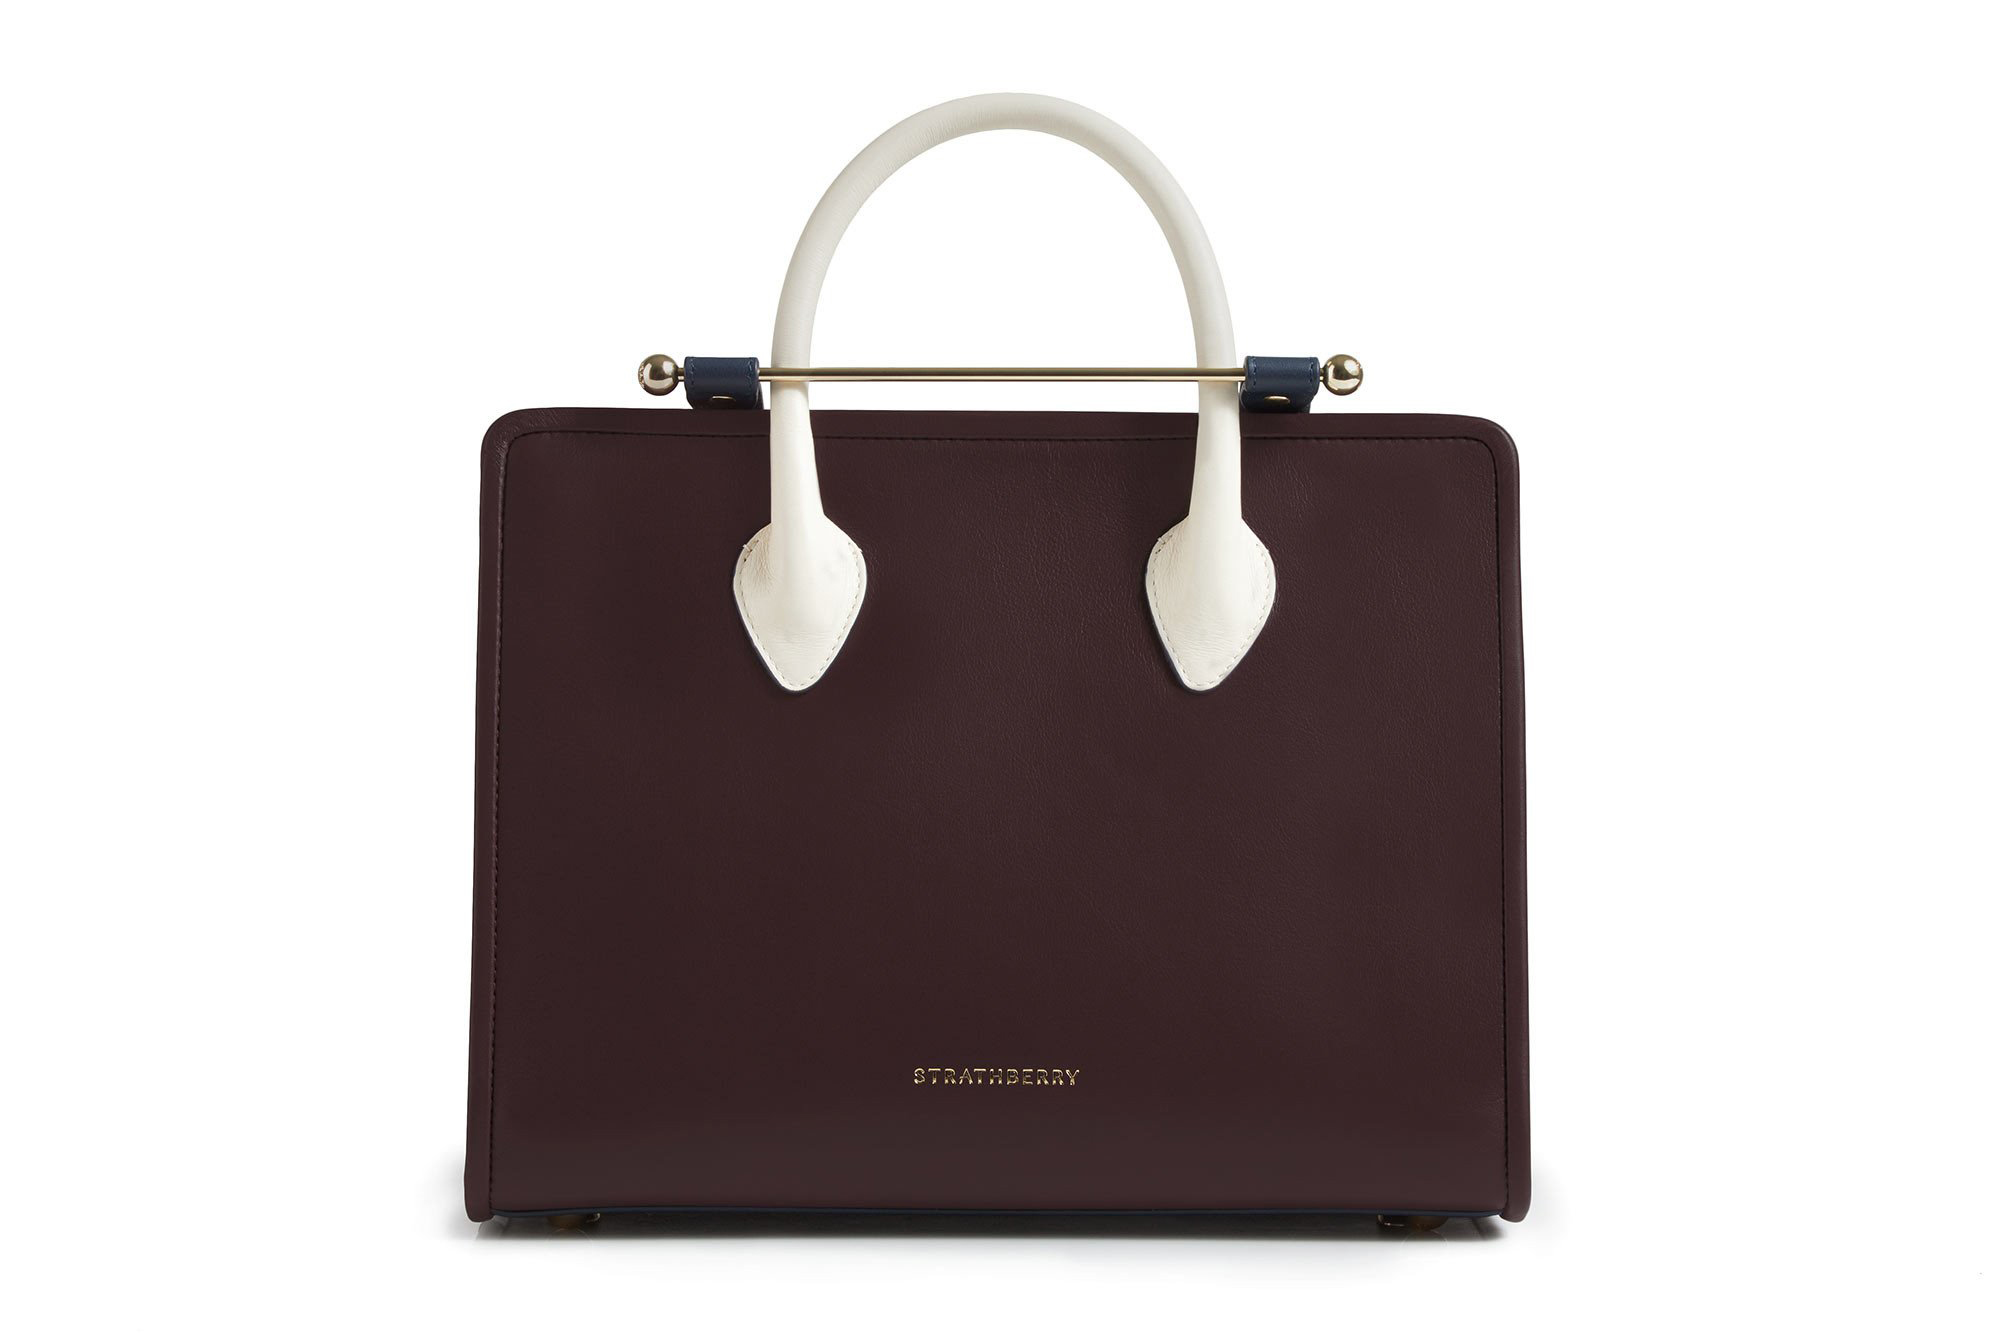 Strathberry: founder of Meghan Markle's favourite handbag on how